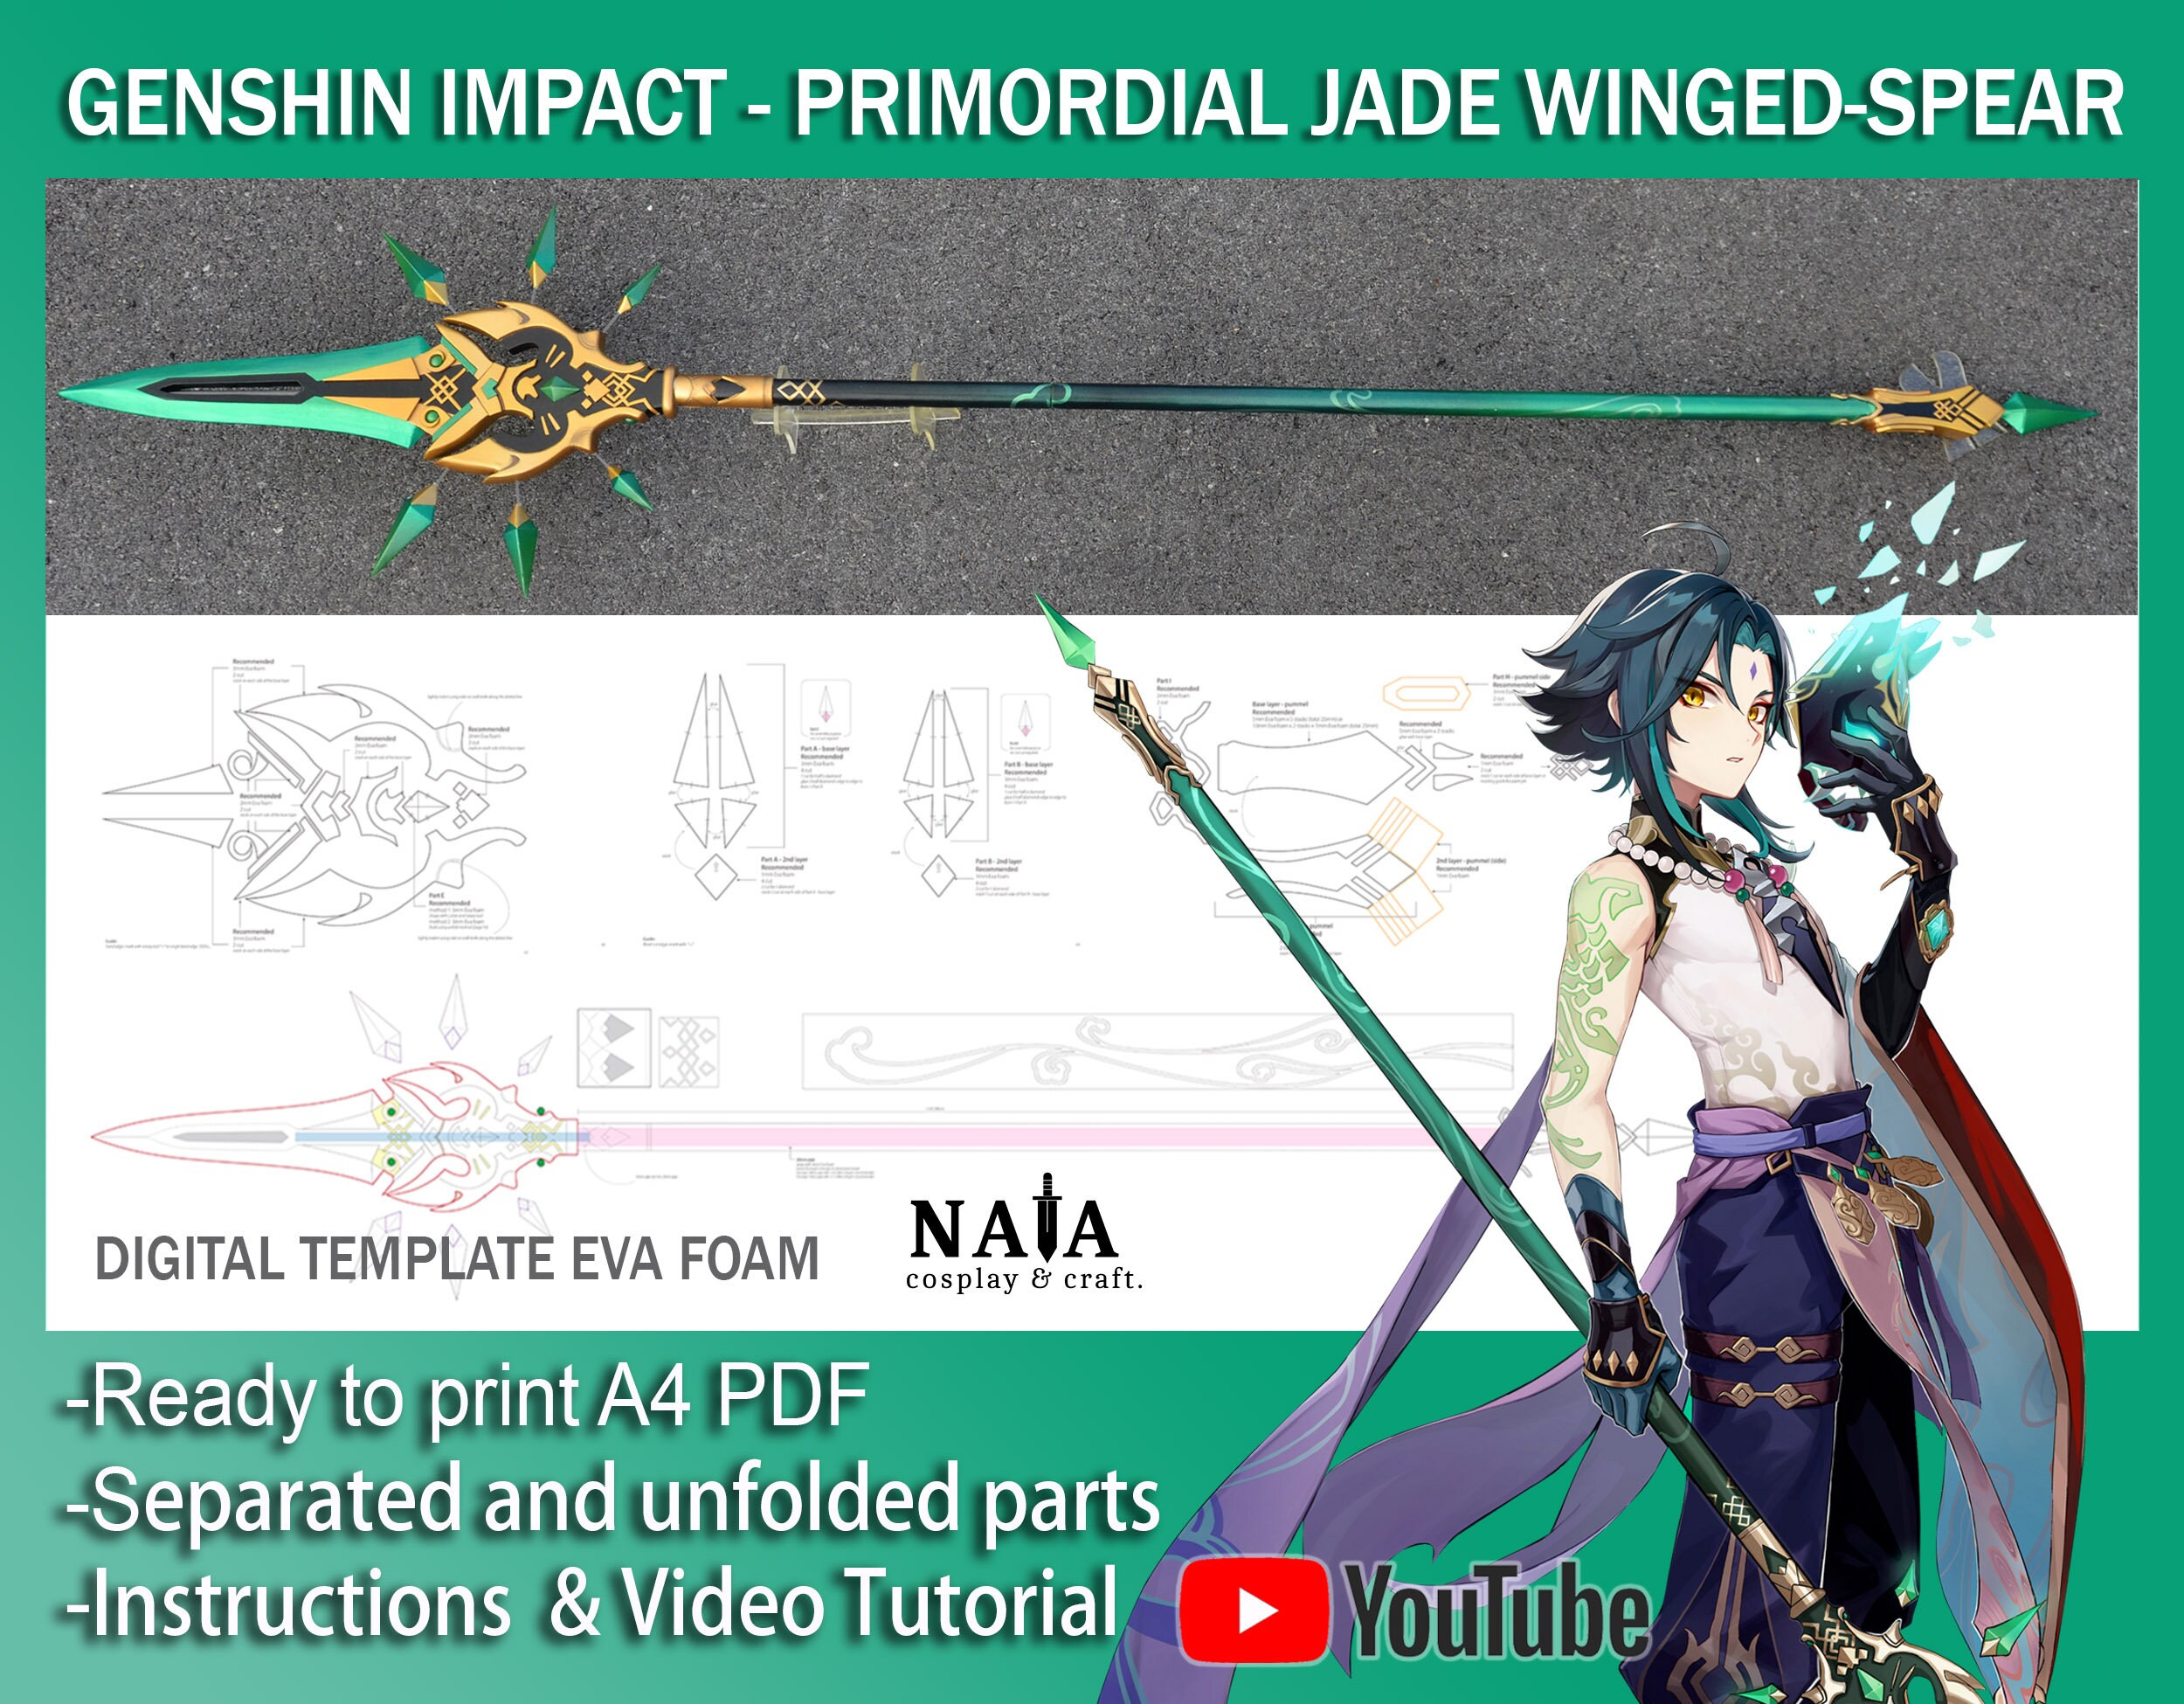 Primordial jade winged spear materials